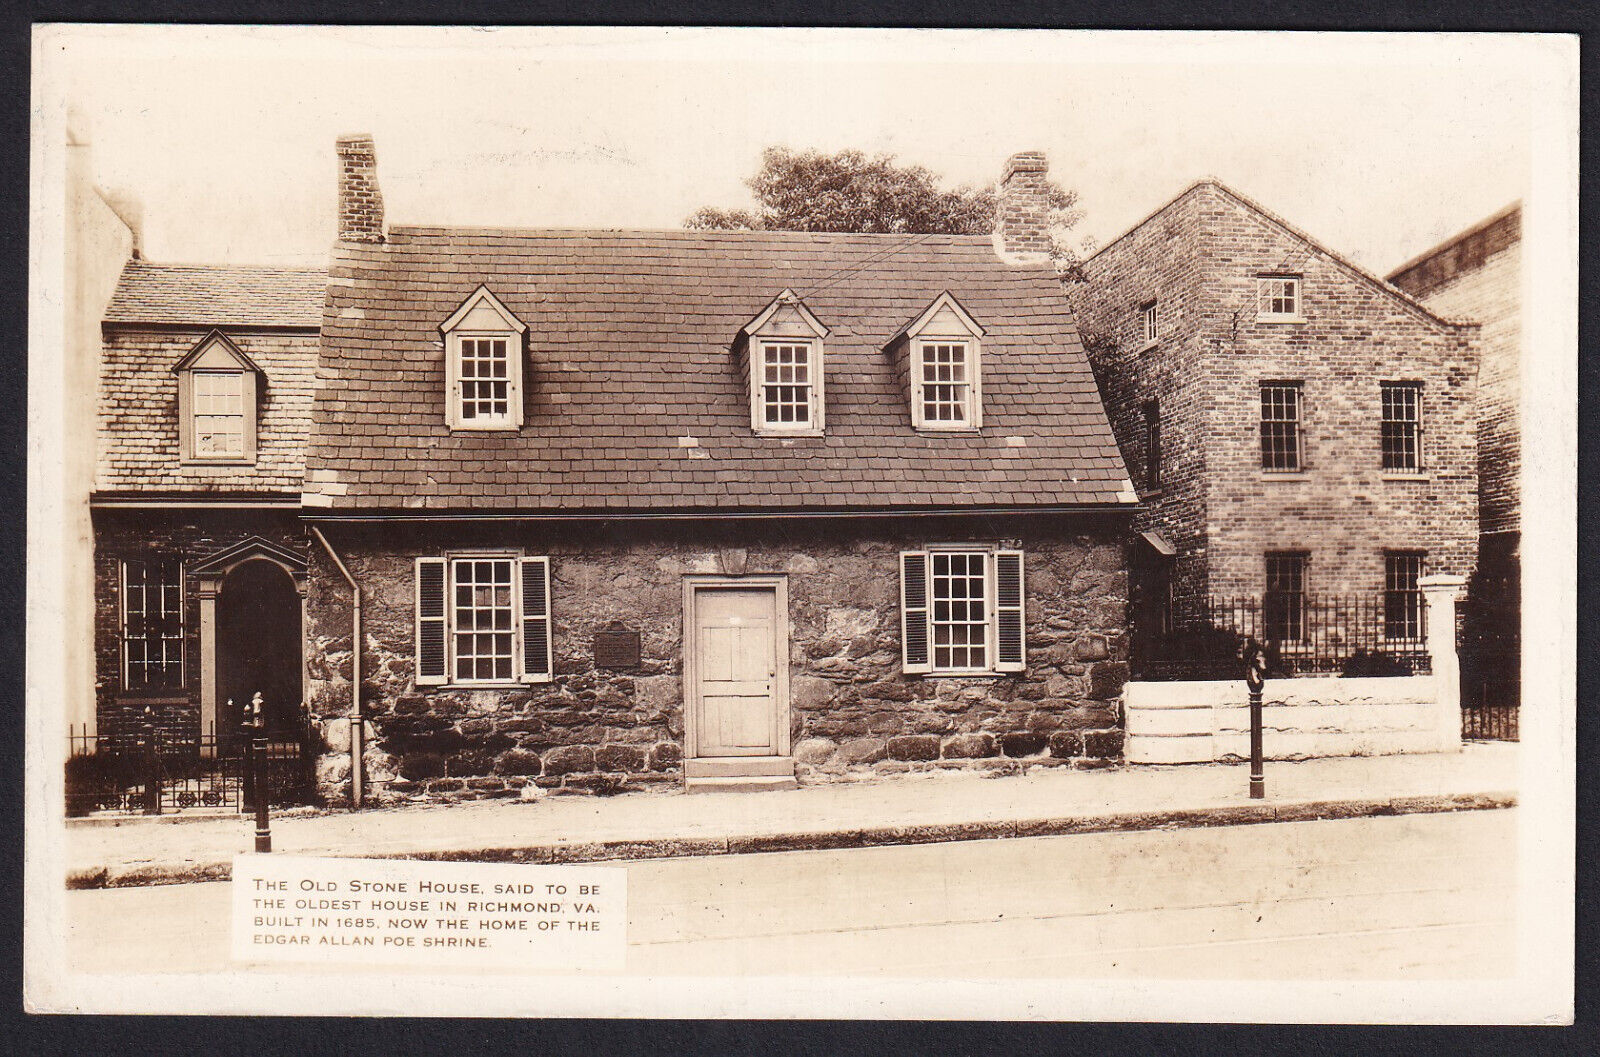 Virginia-VA-Richmond-Real Photo-OldStone House-Oldest-Edgar Allan Poe-RPPC